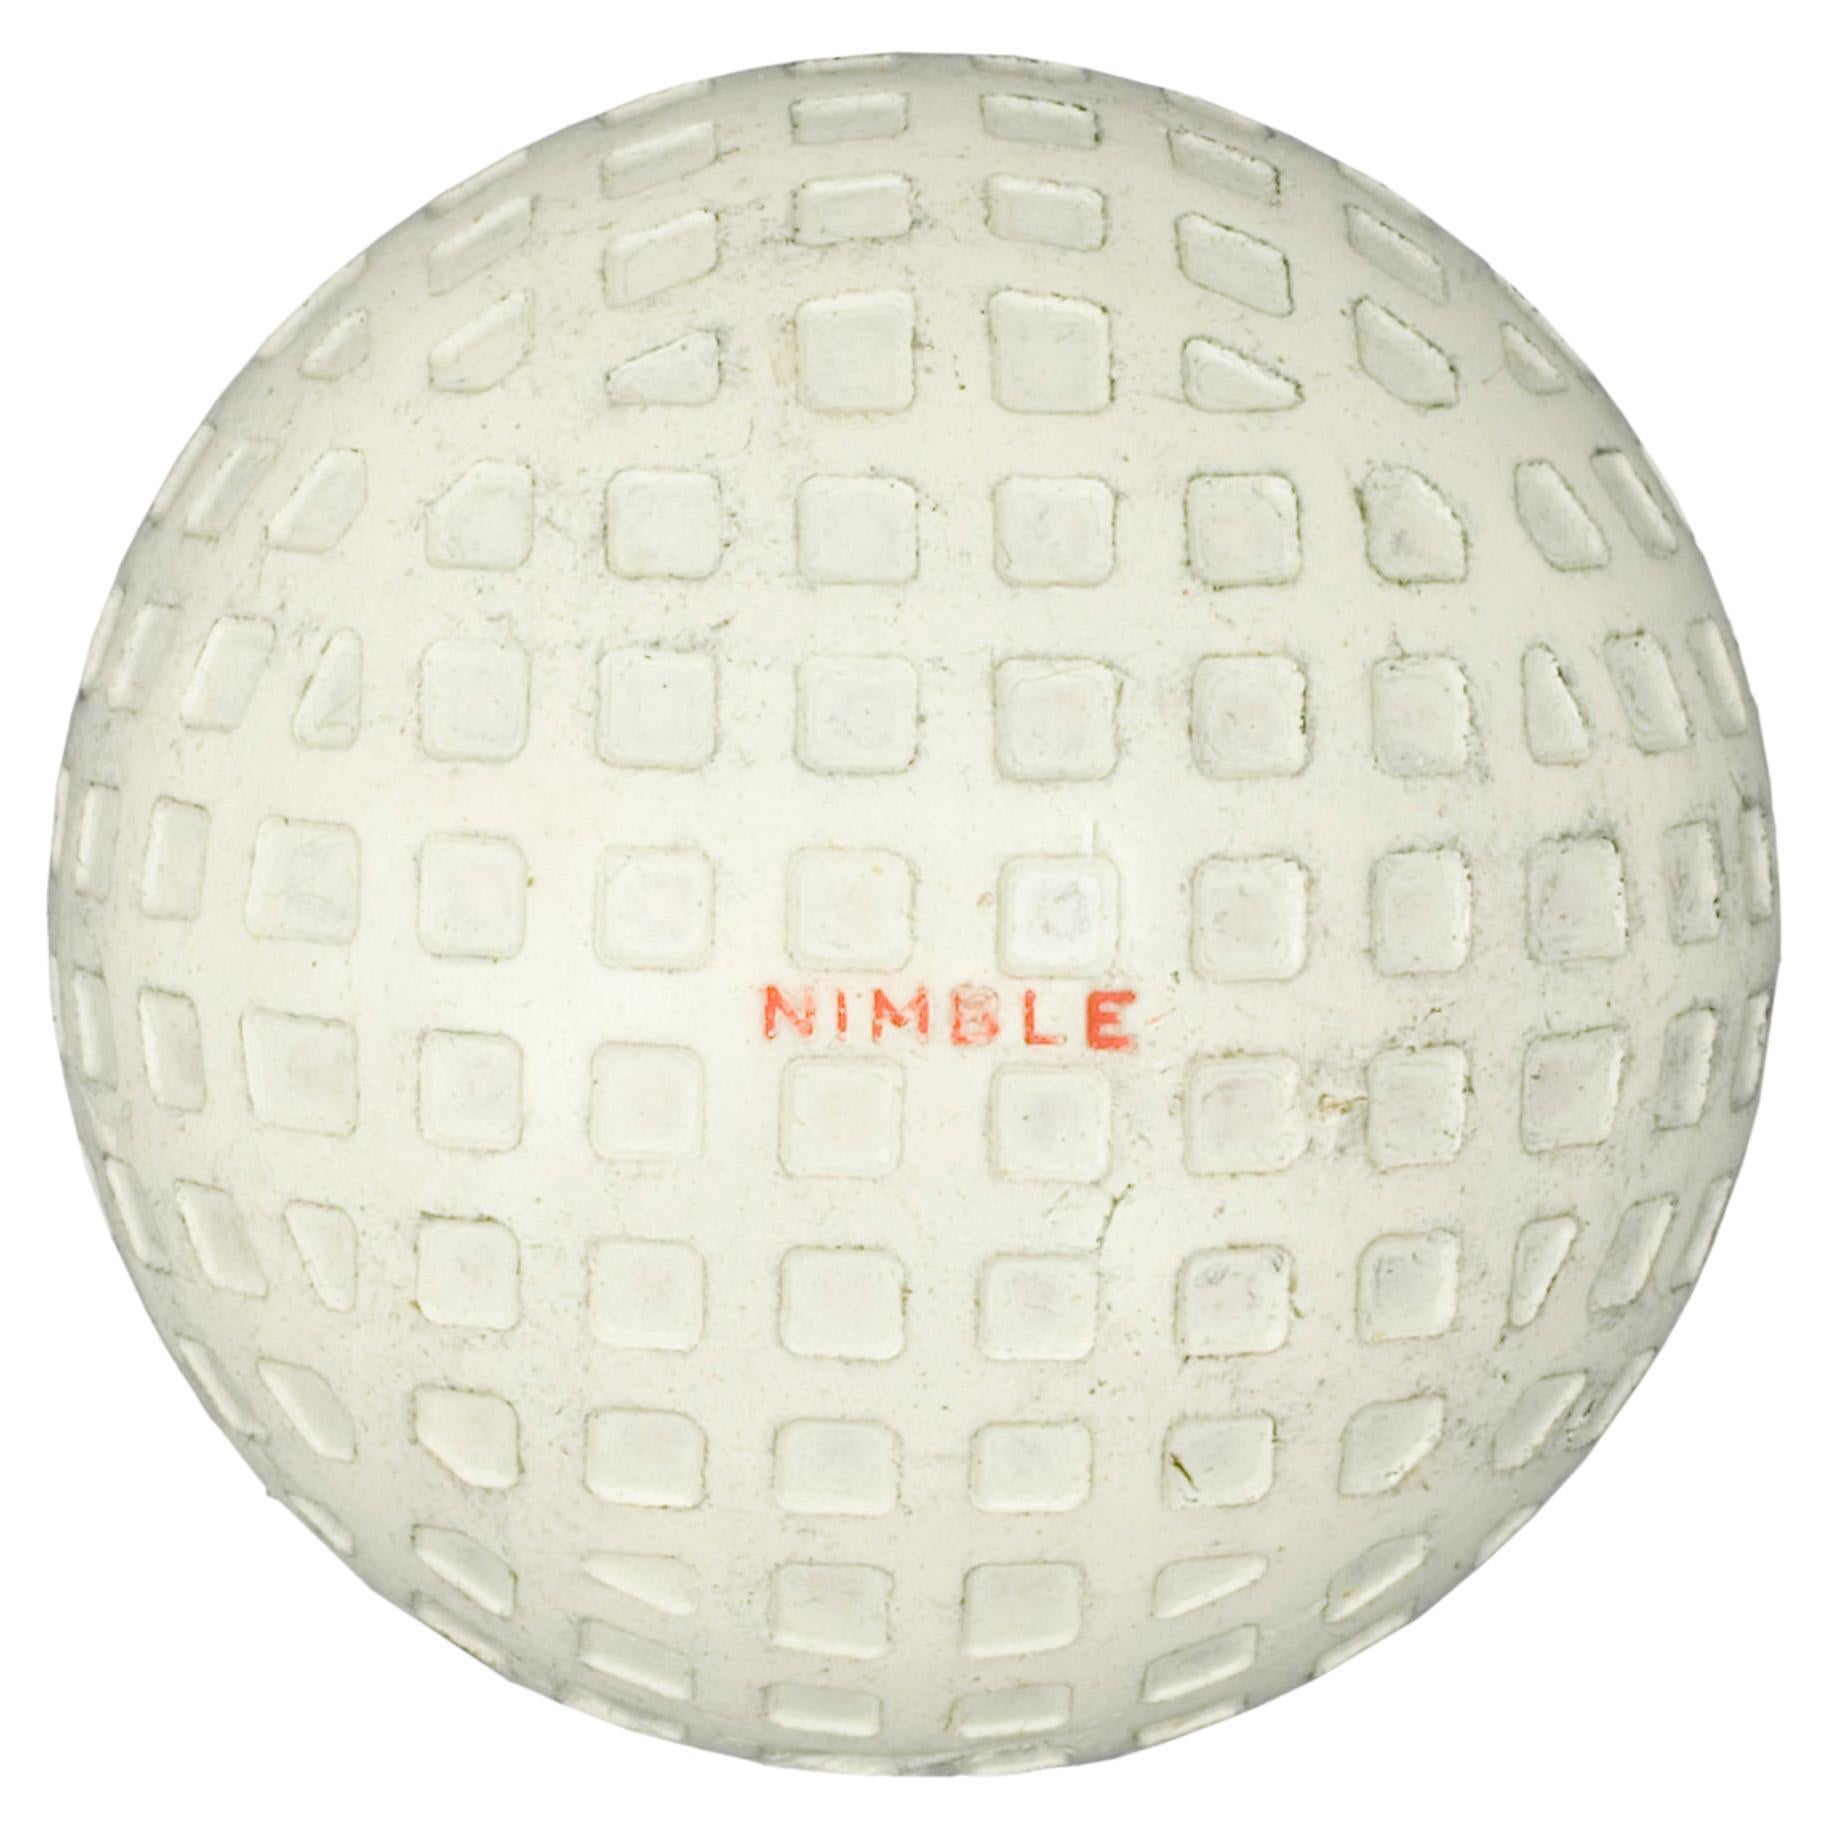 Vintage Mesh Pattern, Nimble Golf Ball, by Spalding